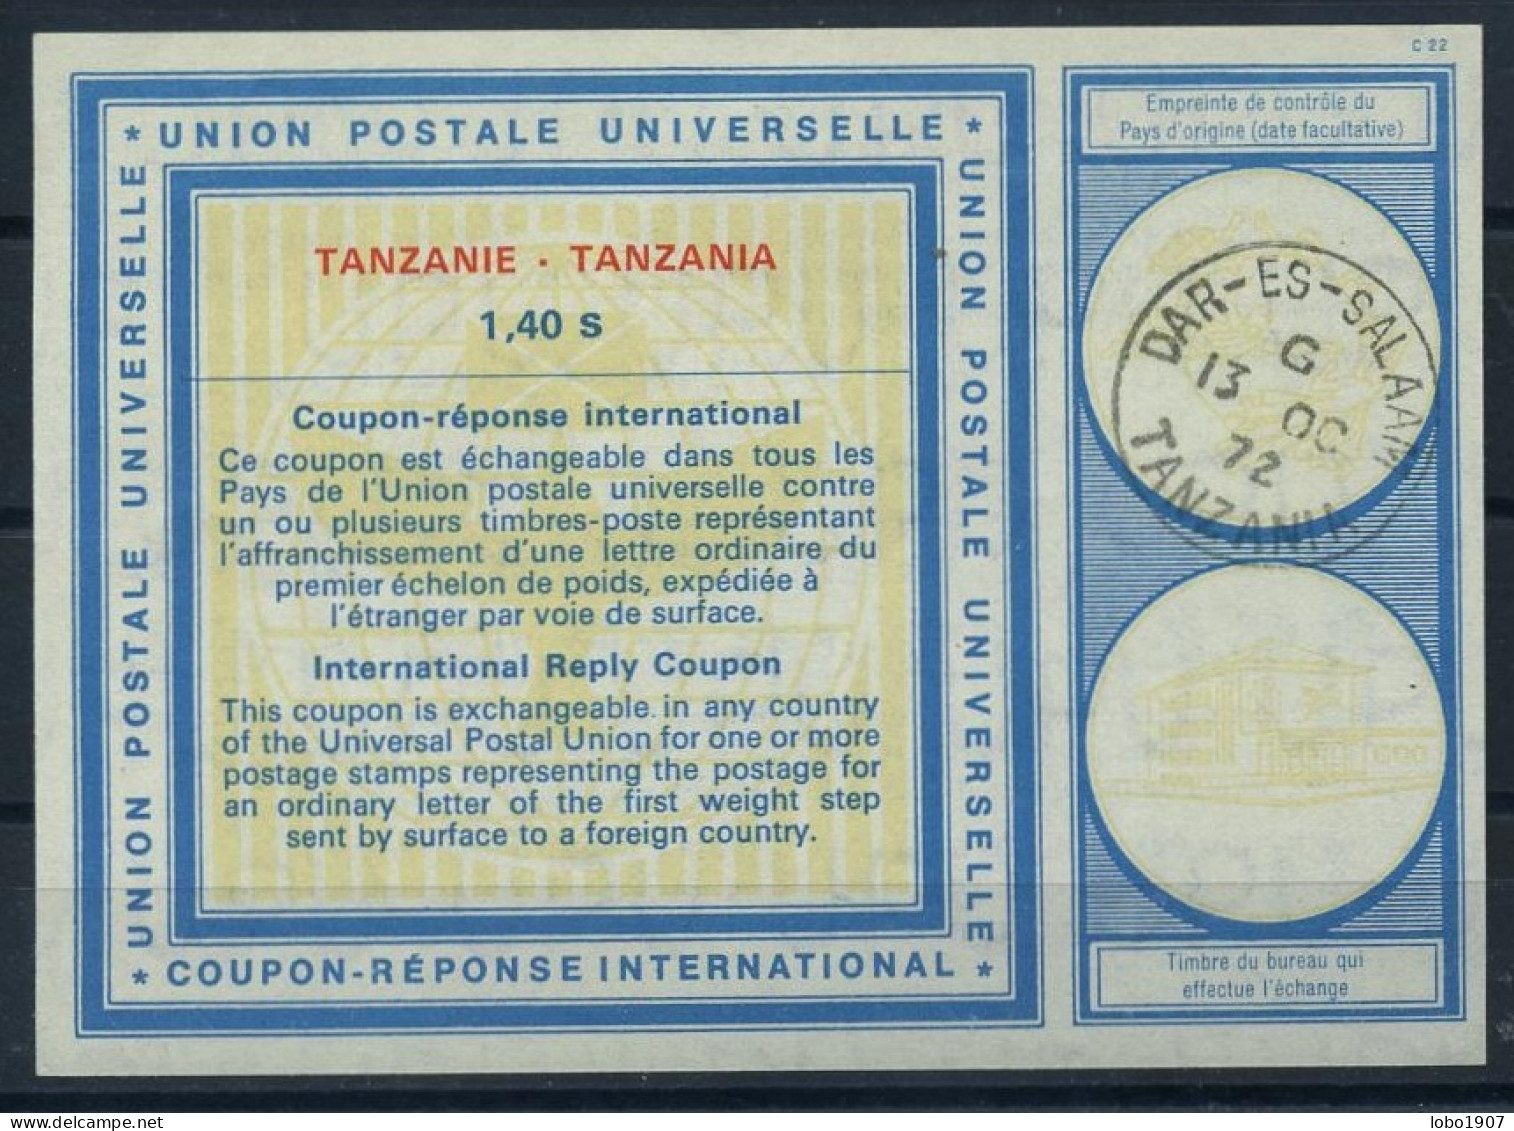 TANZANIE TANZANIA  Vi20  1,40 S  International Reply Coupon Reponse Antwortschein IRC IAS  DAR-ES-SALAAM 13.10.72 - Tansania (1964-...)